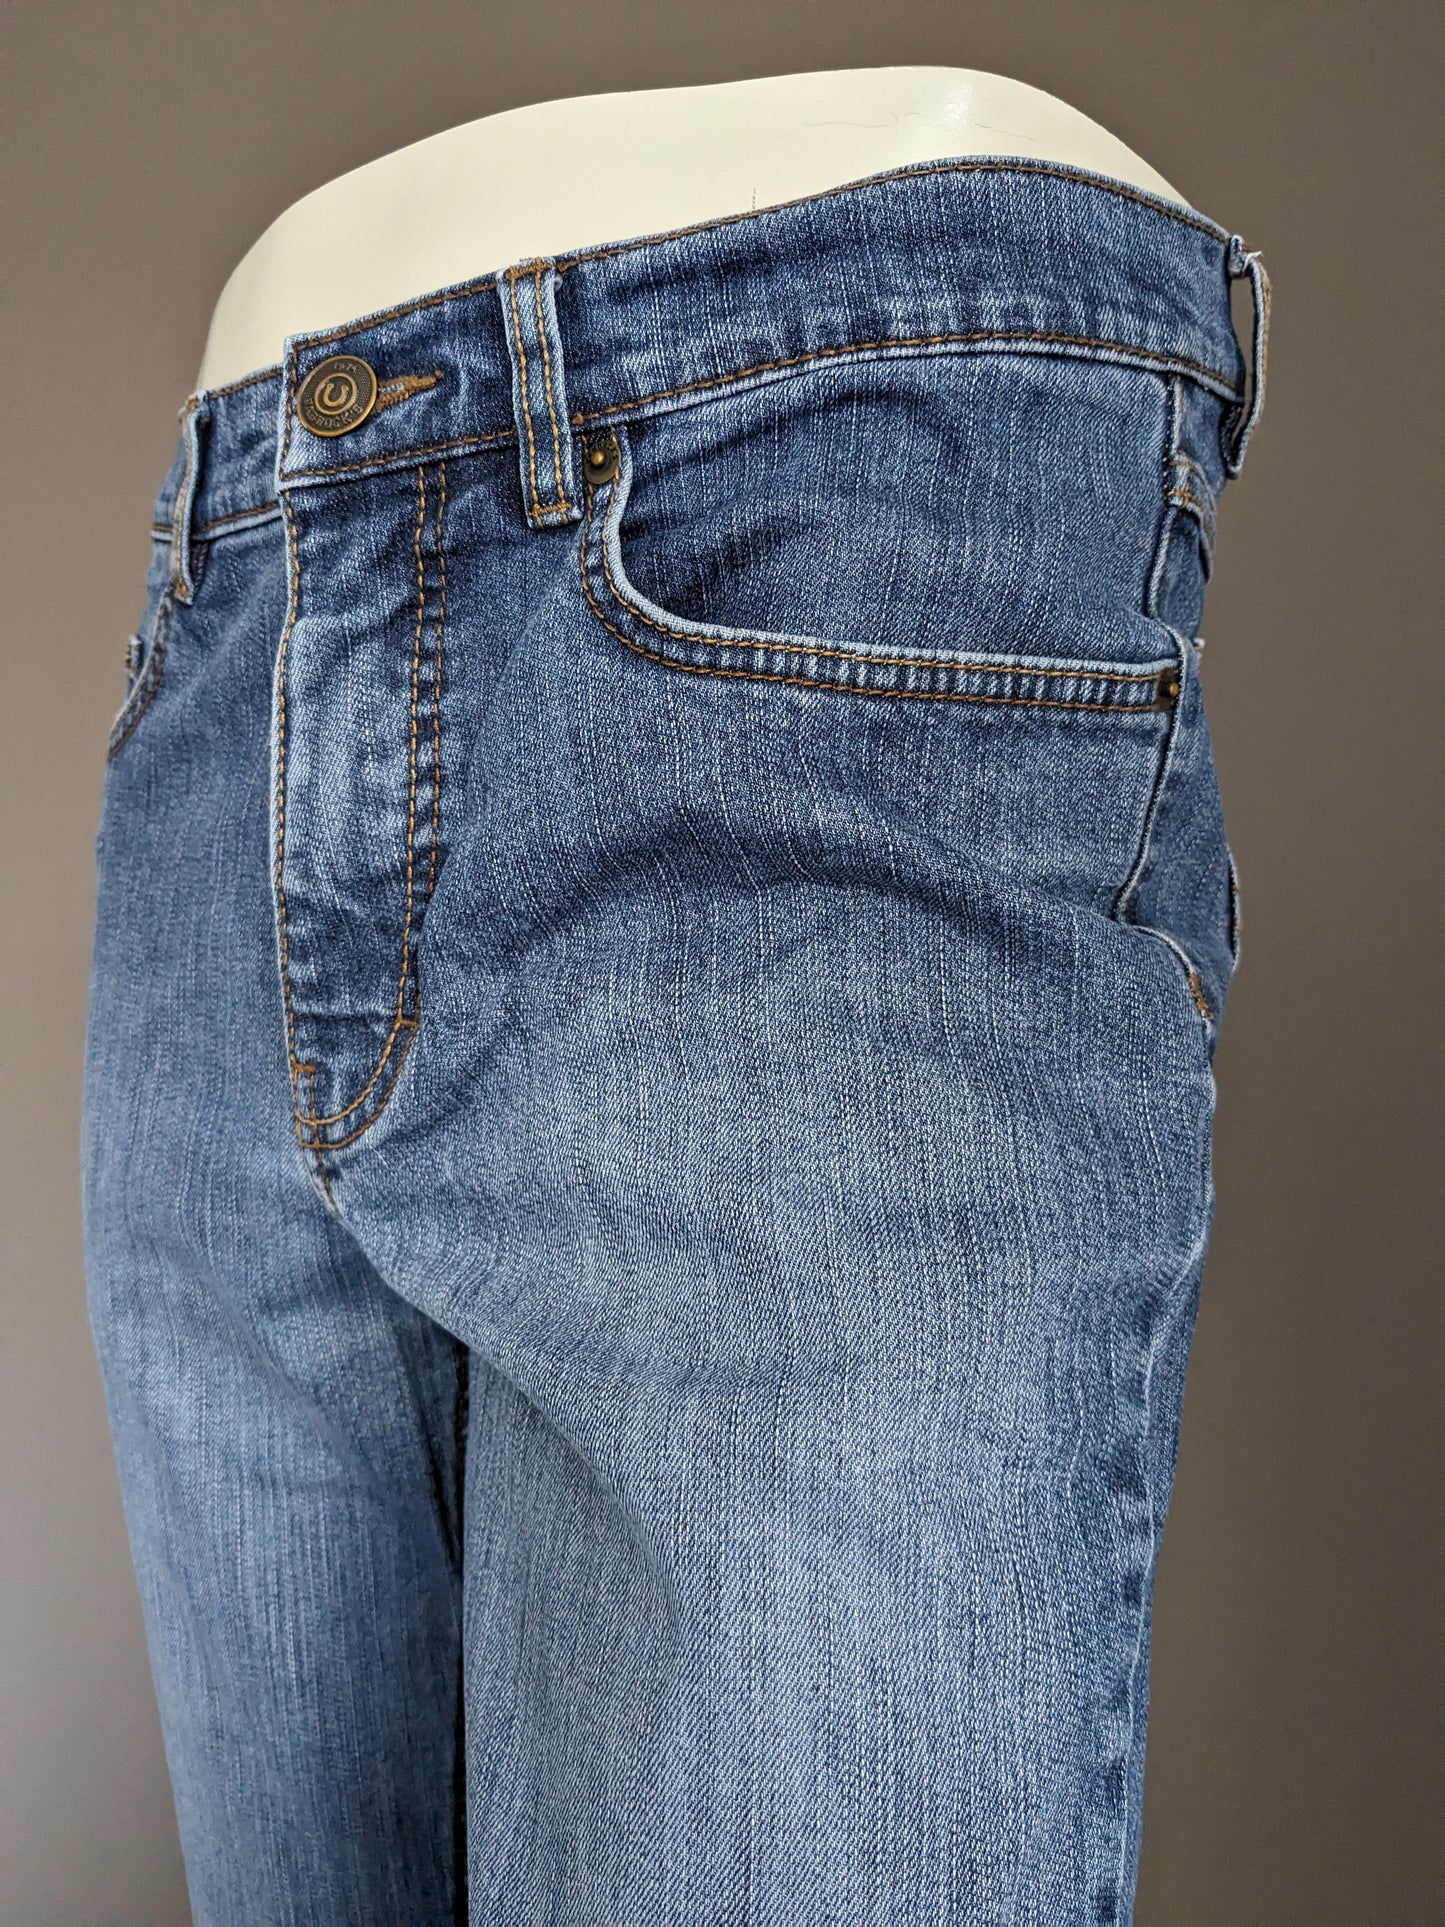 Paddocks Jeans. Azul. W33 - L30. Escriba '' Ranger ''